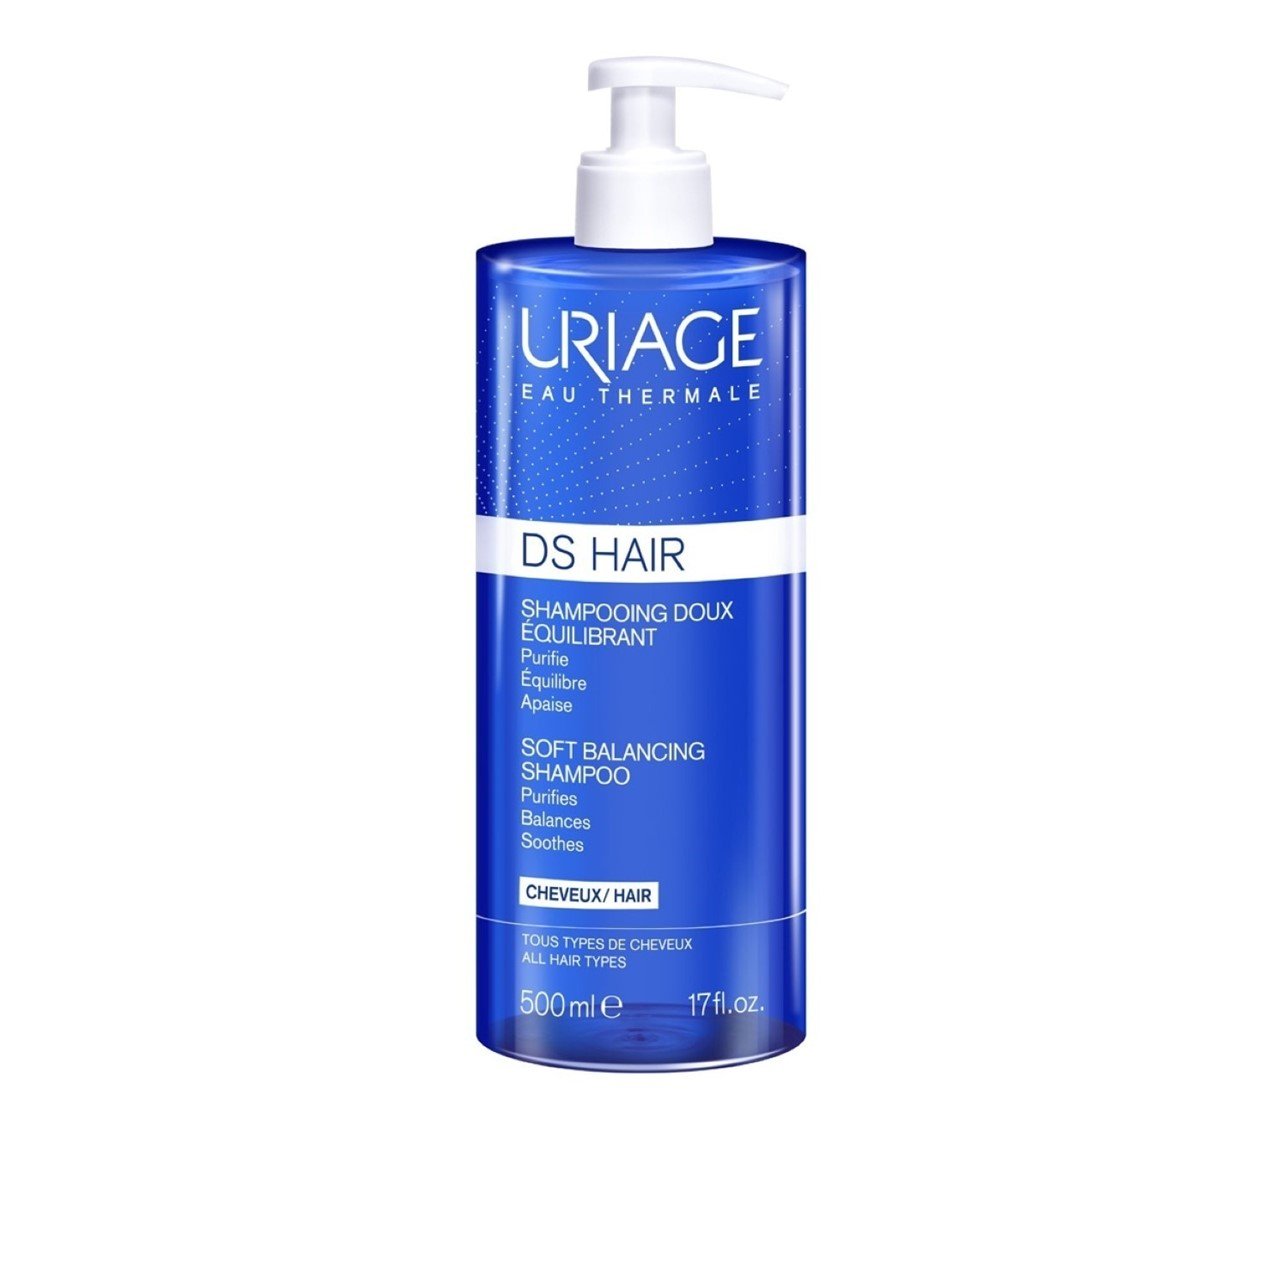 Uriage D.S. Hair Soft Balancing Shampoo 500ml (16.91fl oz)